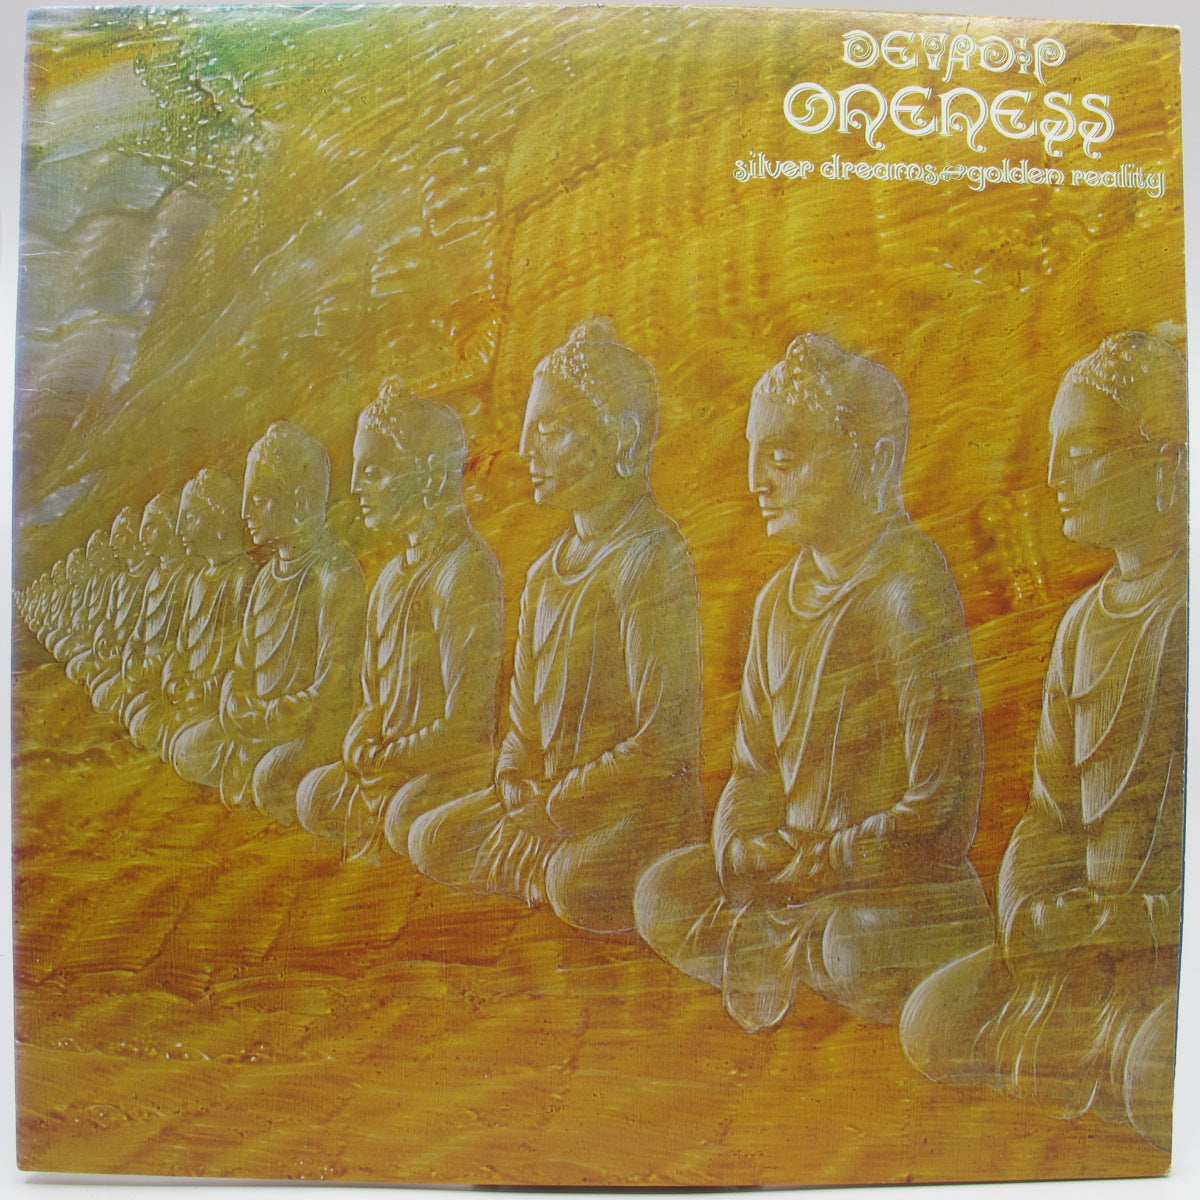 Devadip - Oneness (Silver Dreams~Golden Reality) (Notuð plata VG)